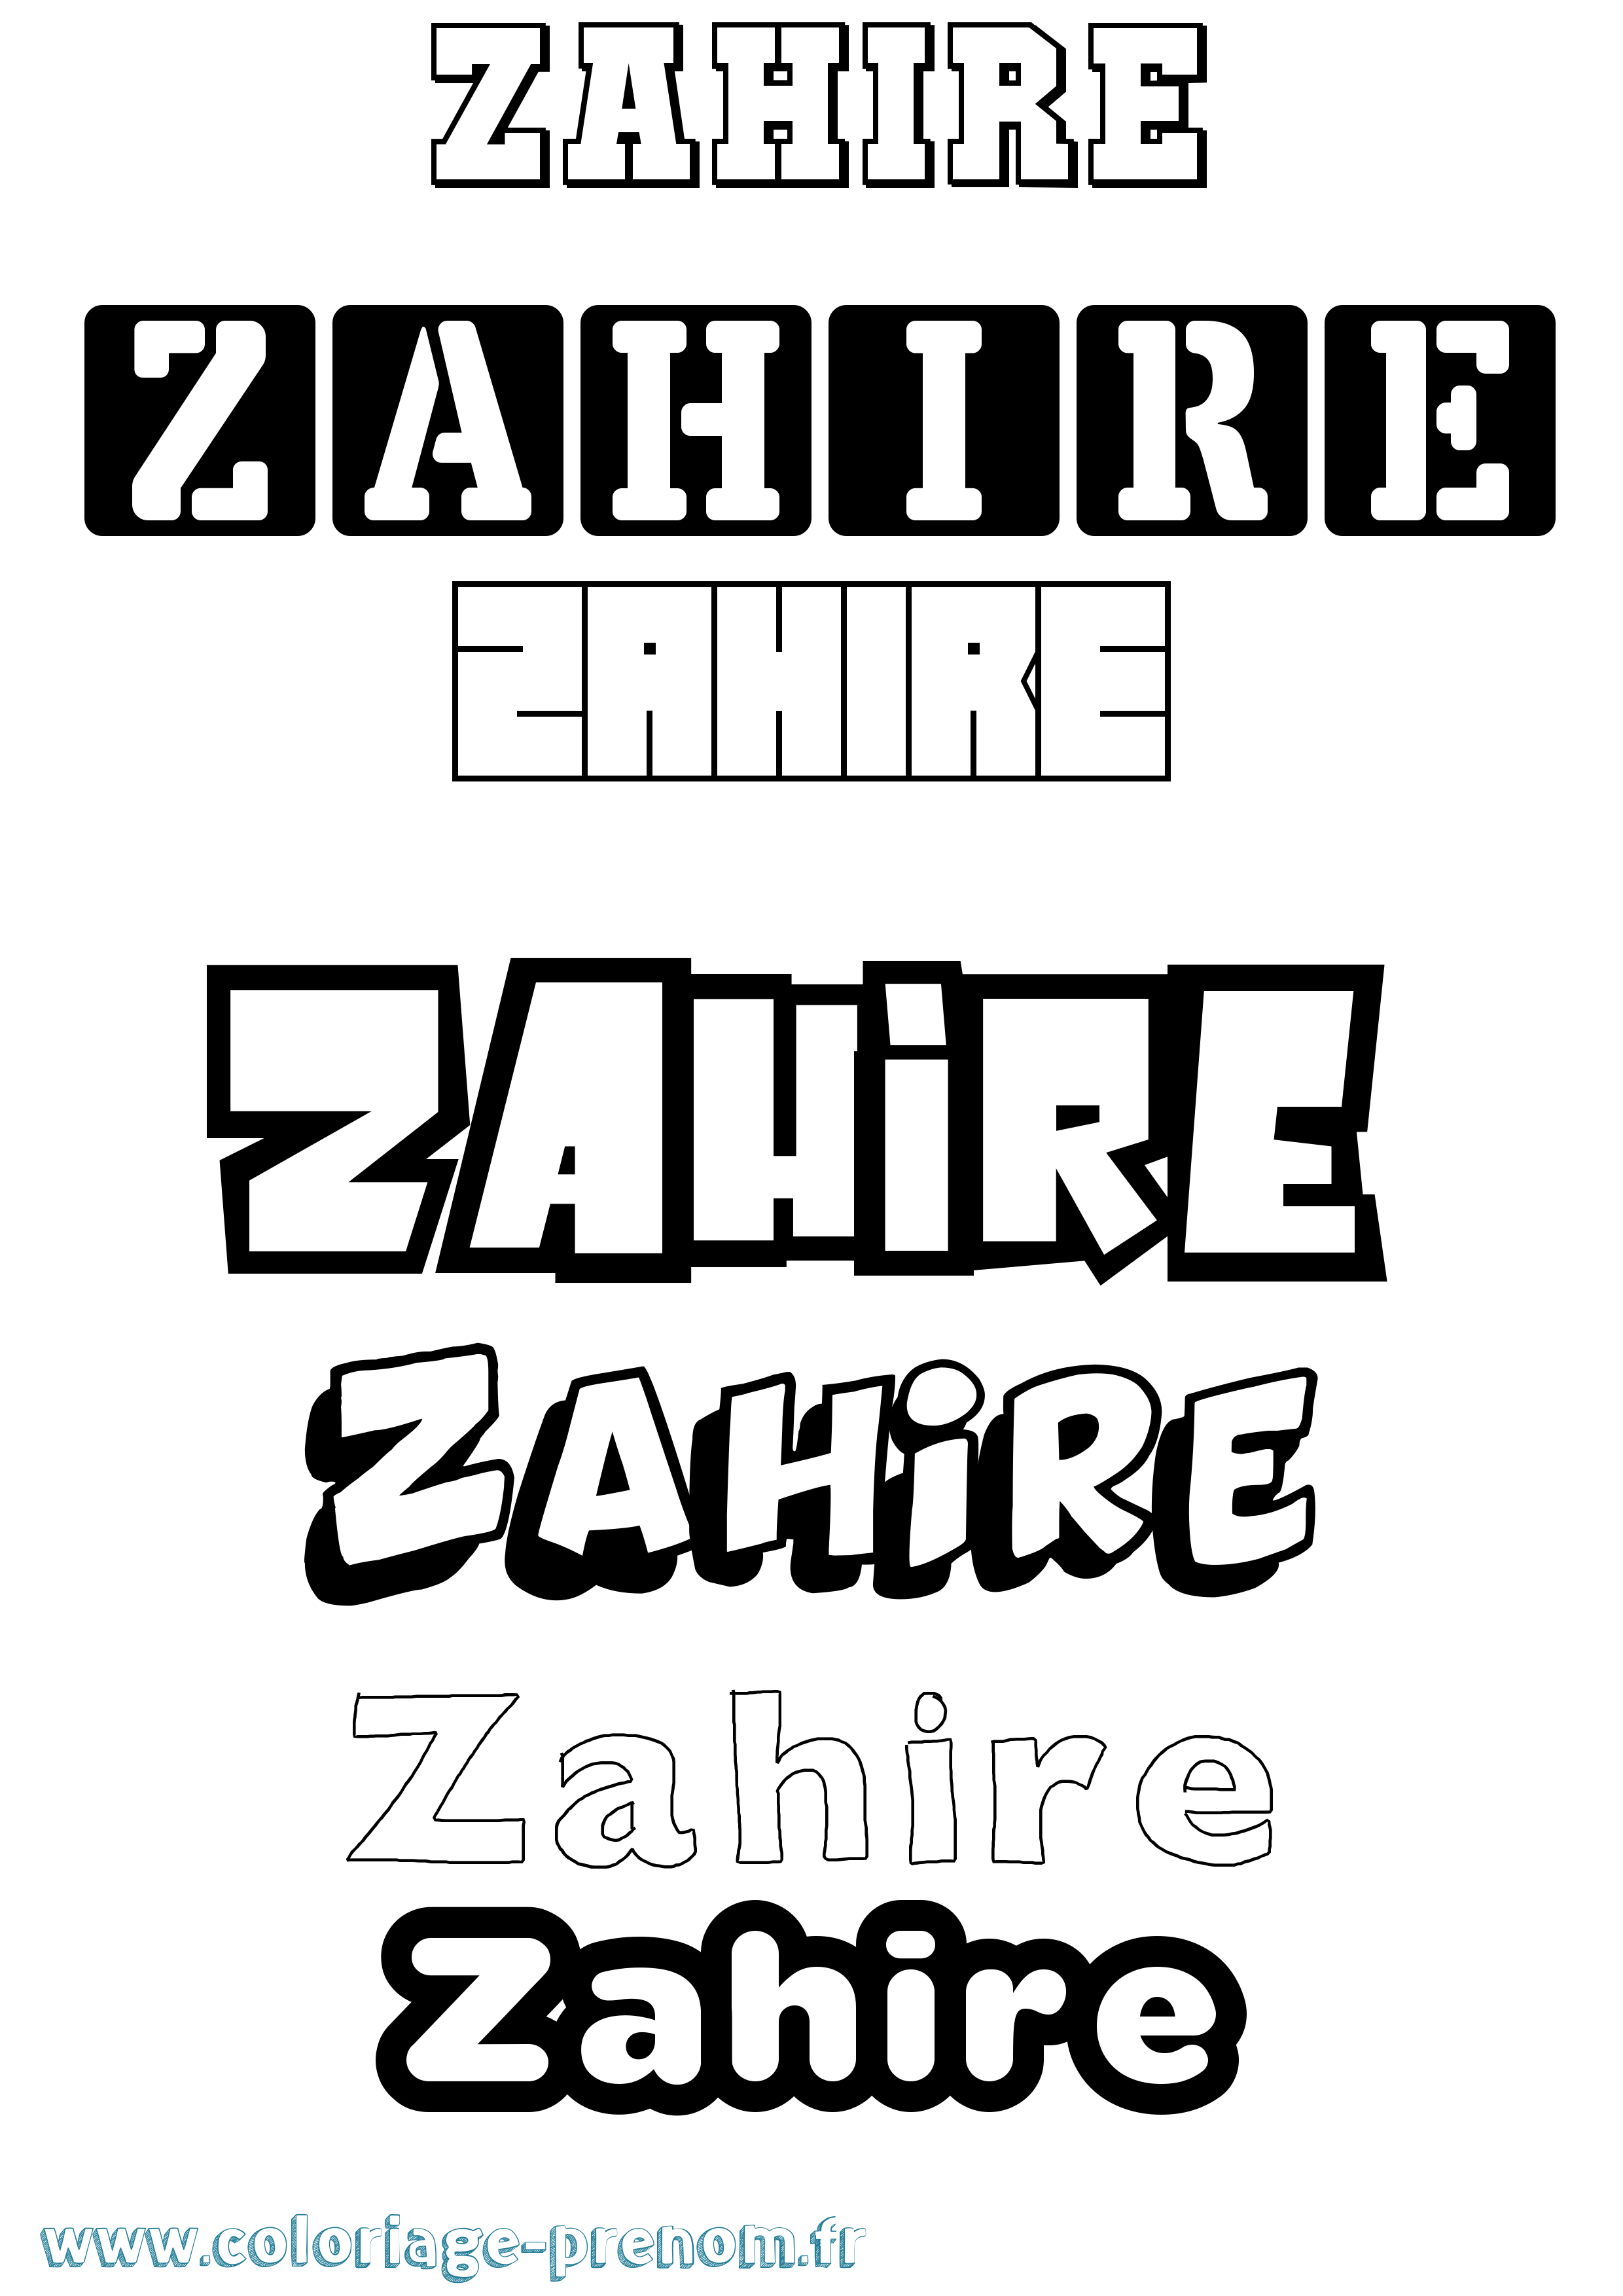 Coloriage prénom Zahire Simple